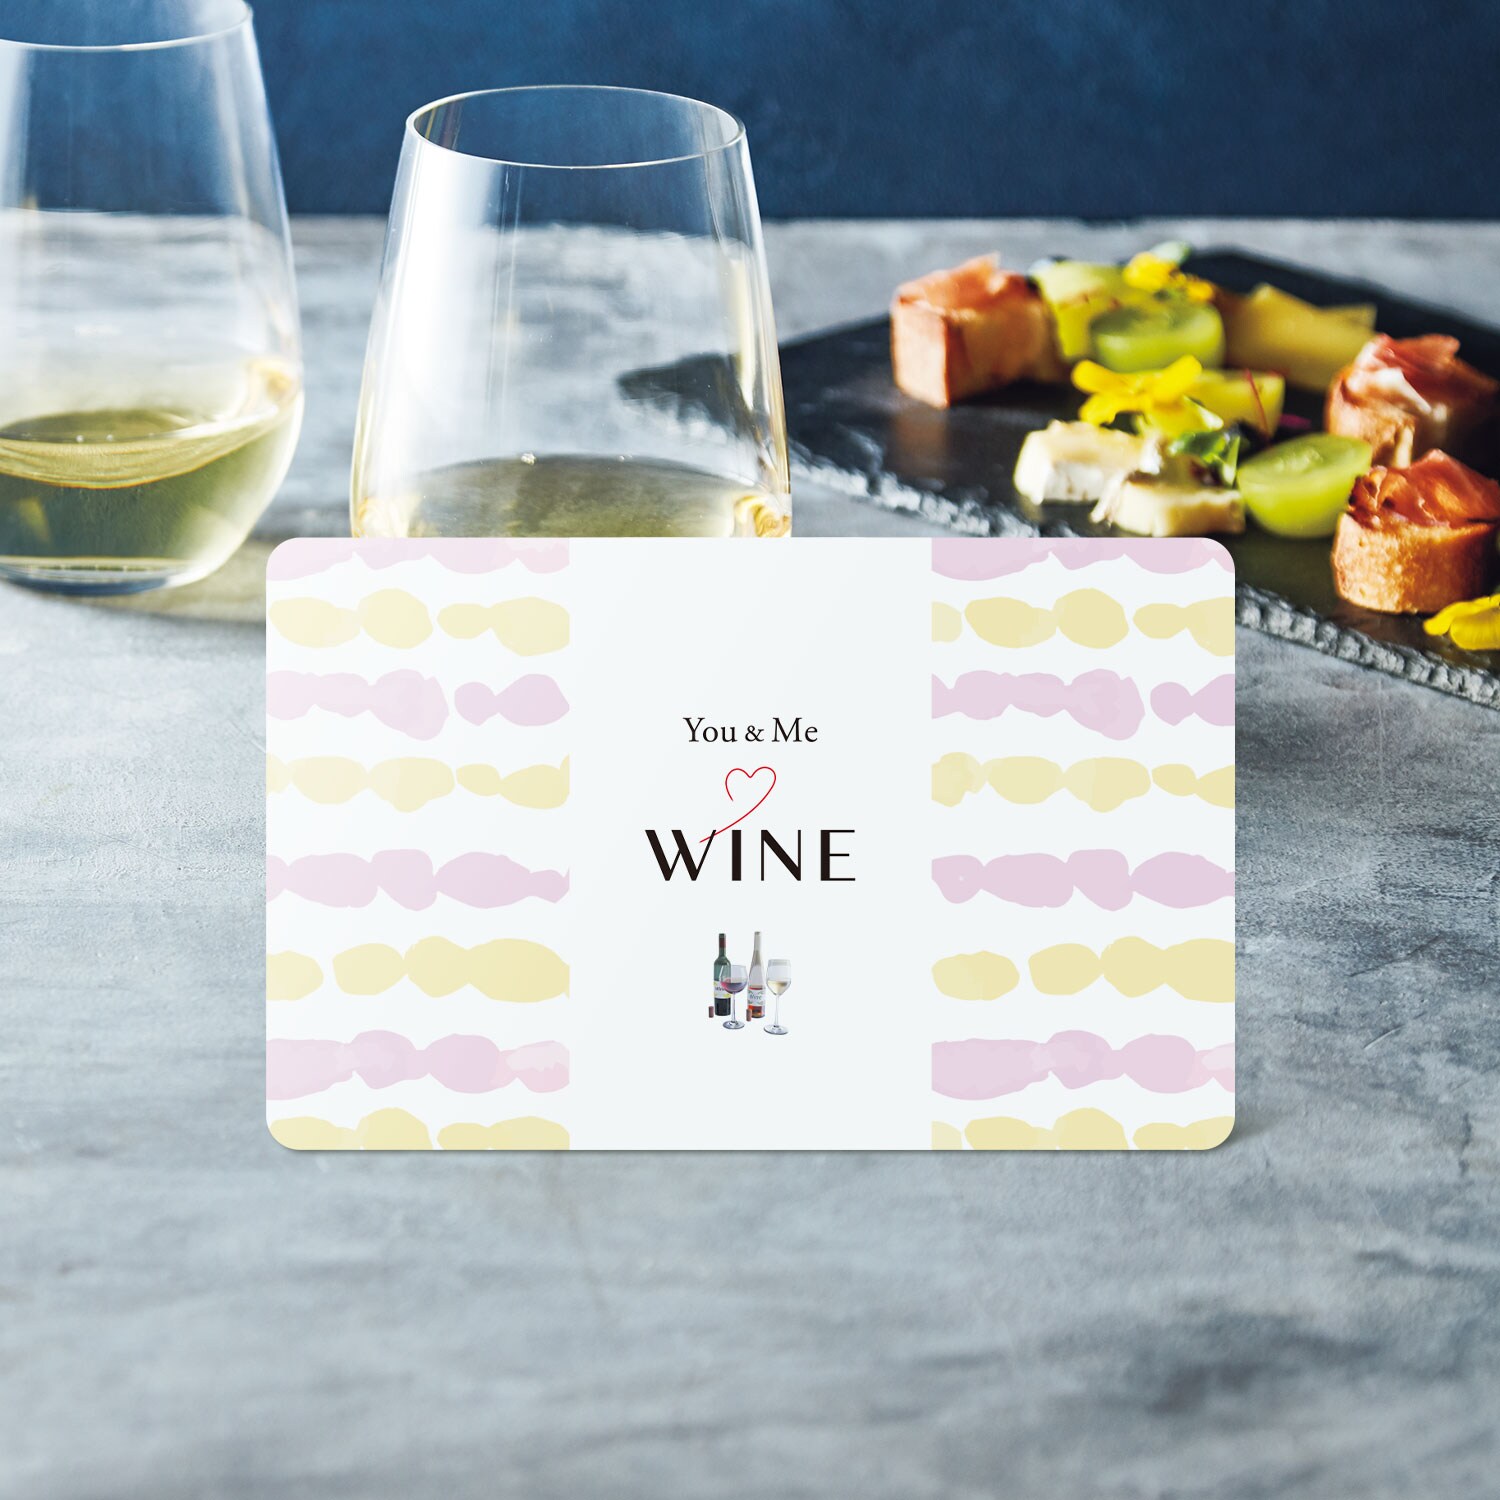 【You & Me】【カードギフト】ワインにハマる夜 ワインギフトカード「You & Me WINE」AEO